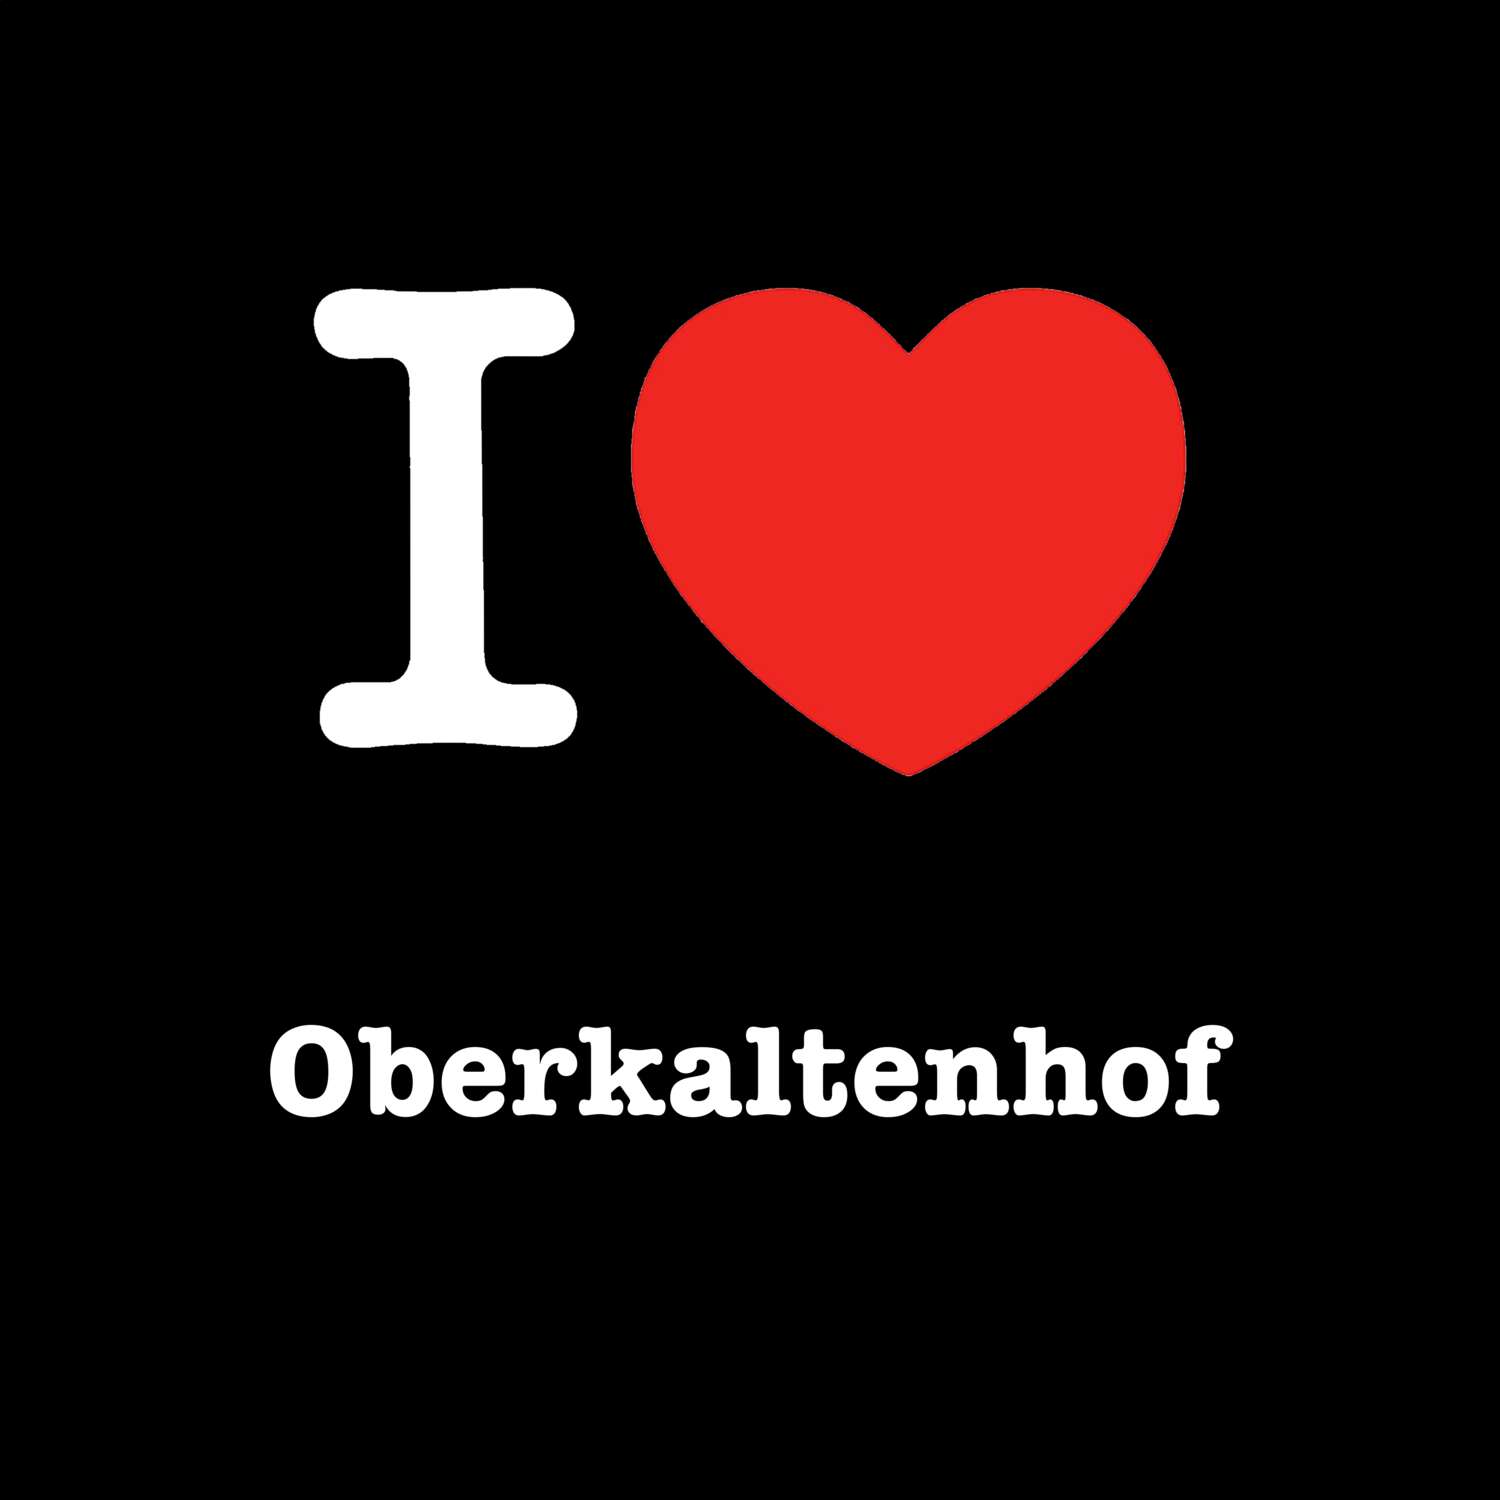 Oberkaltenhof T-Shirt »I love«